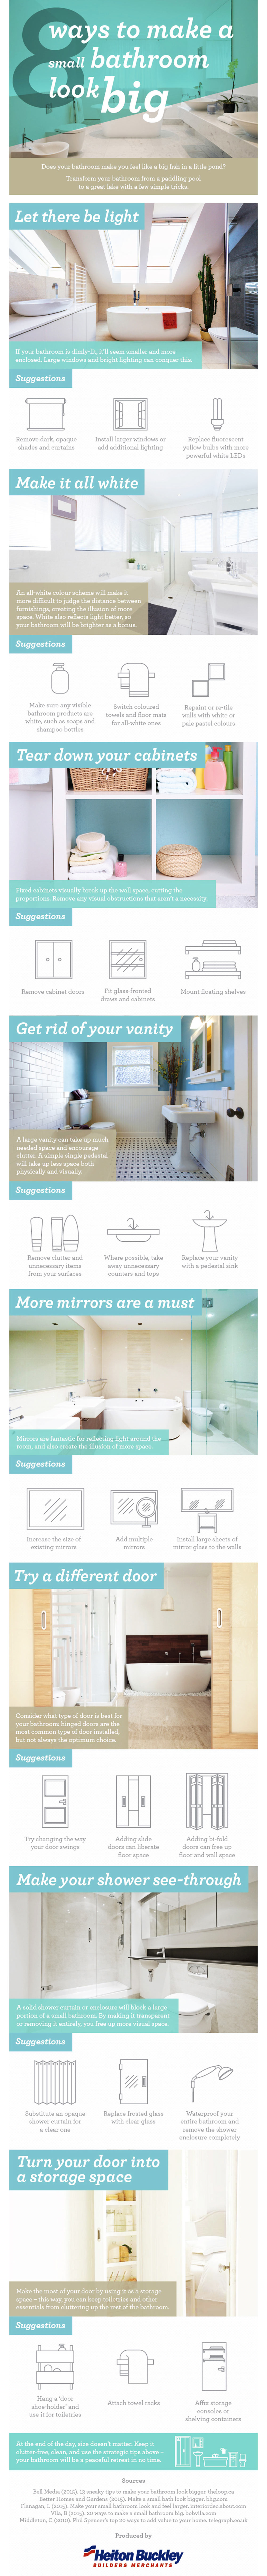 8 Tips to Make a Small Bathroom Look Bigger - Interior Design Infographic